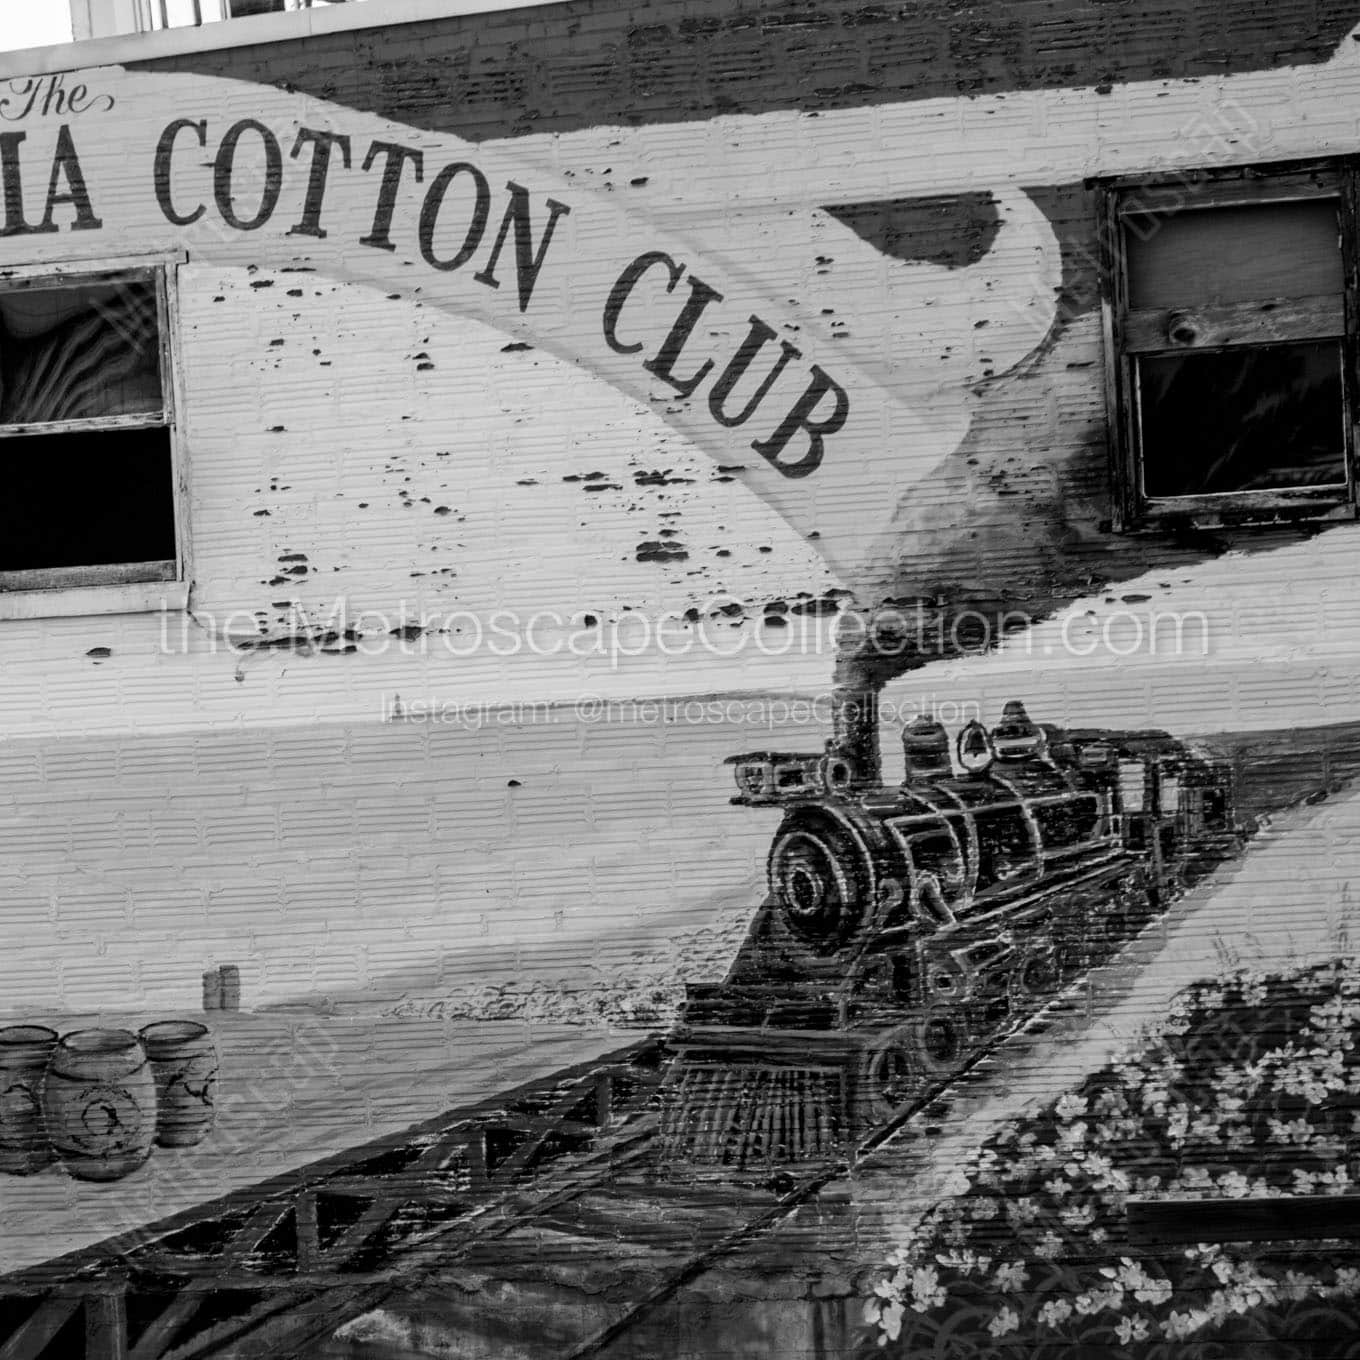 magnolia cotton club mural Black & White Wall Art